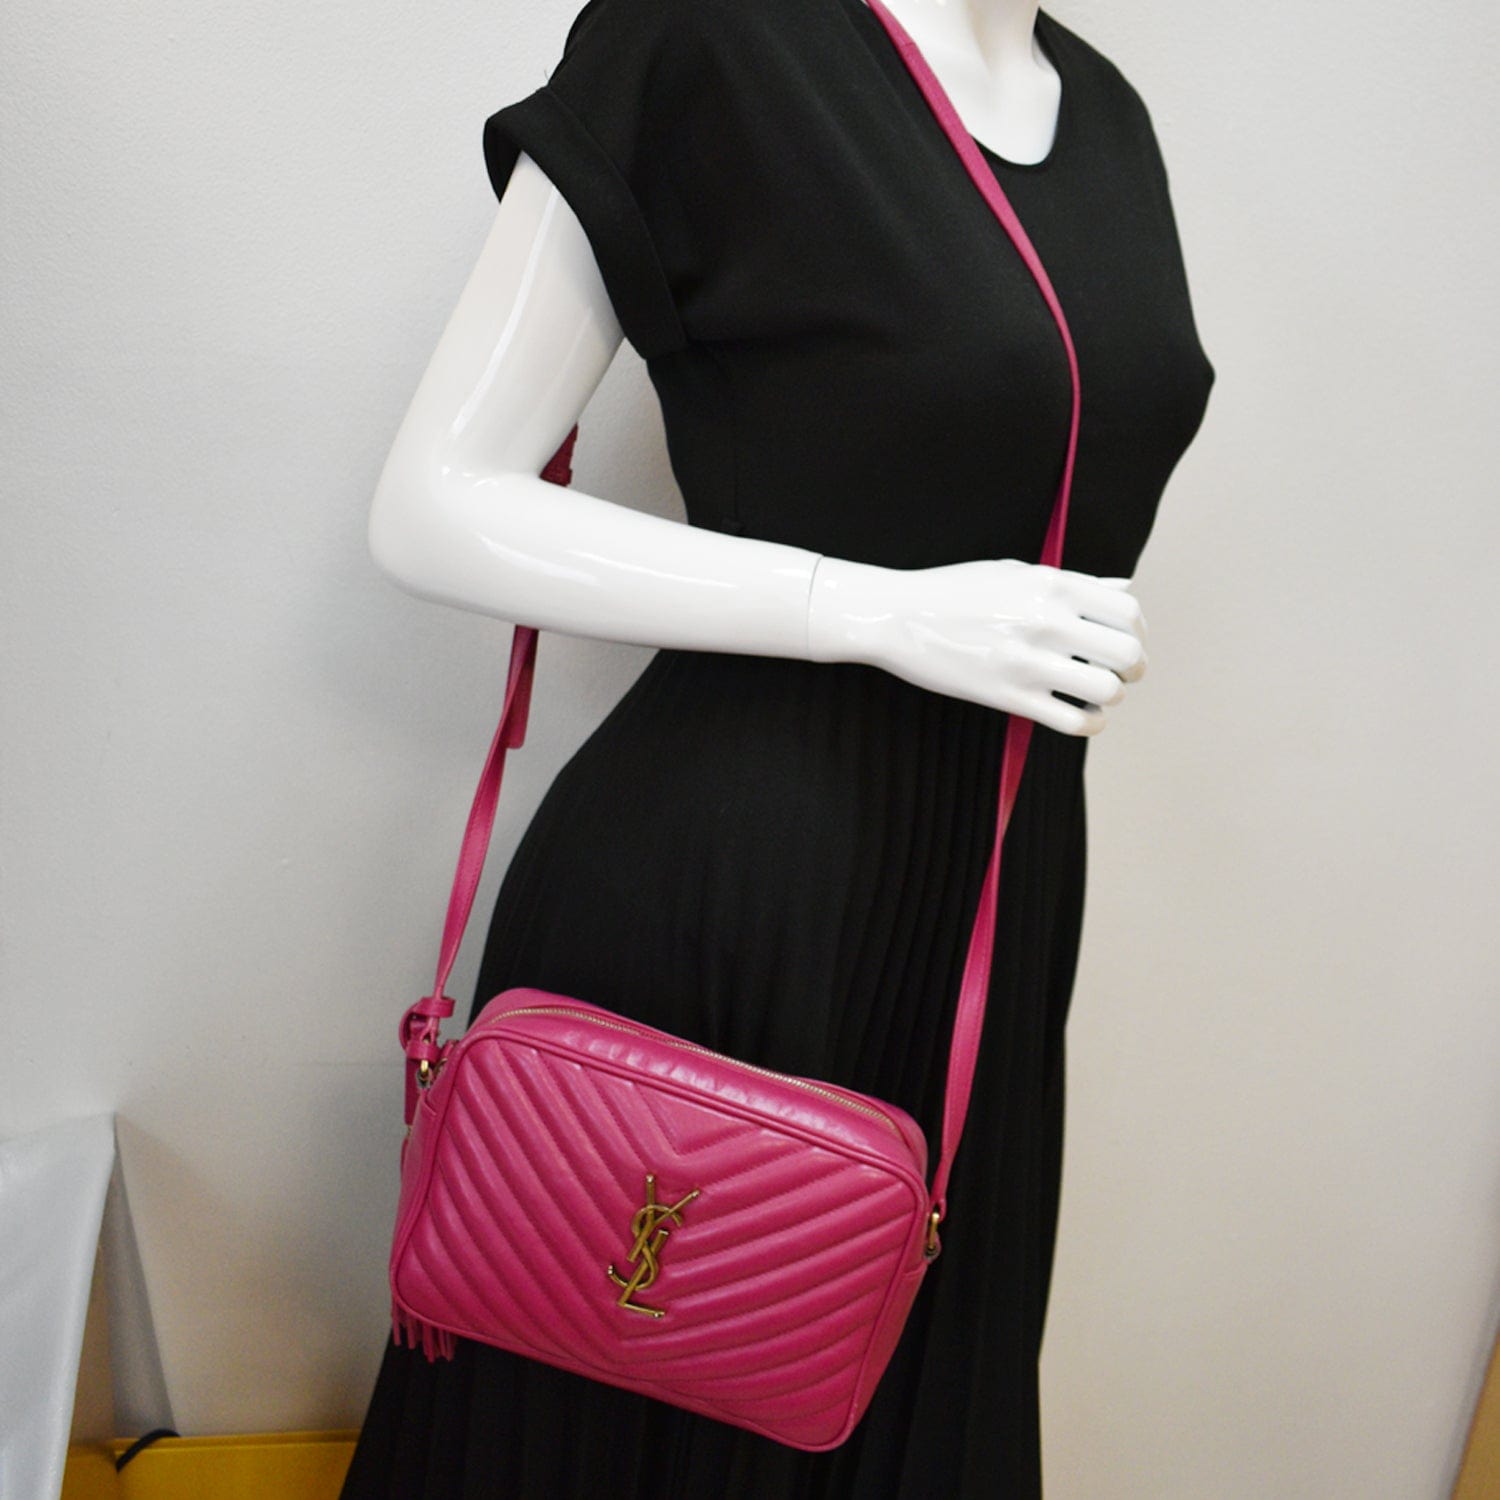 Saint Laurent Mini Lou Leather Shoulder Bag in Pink